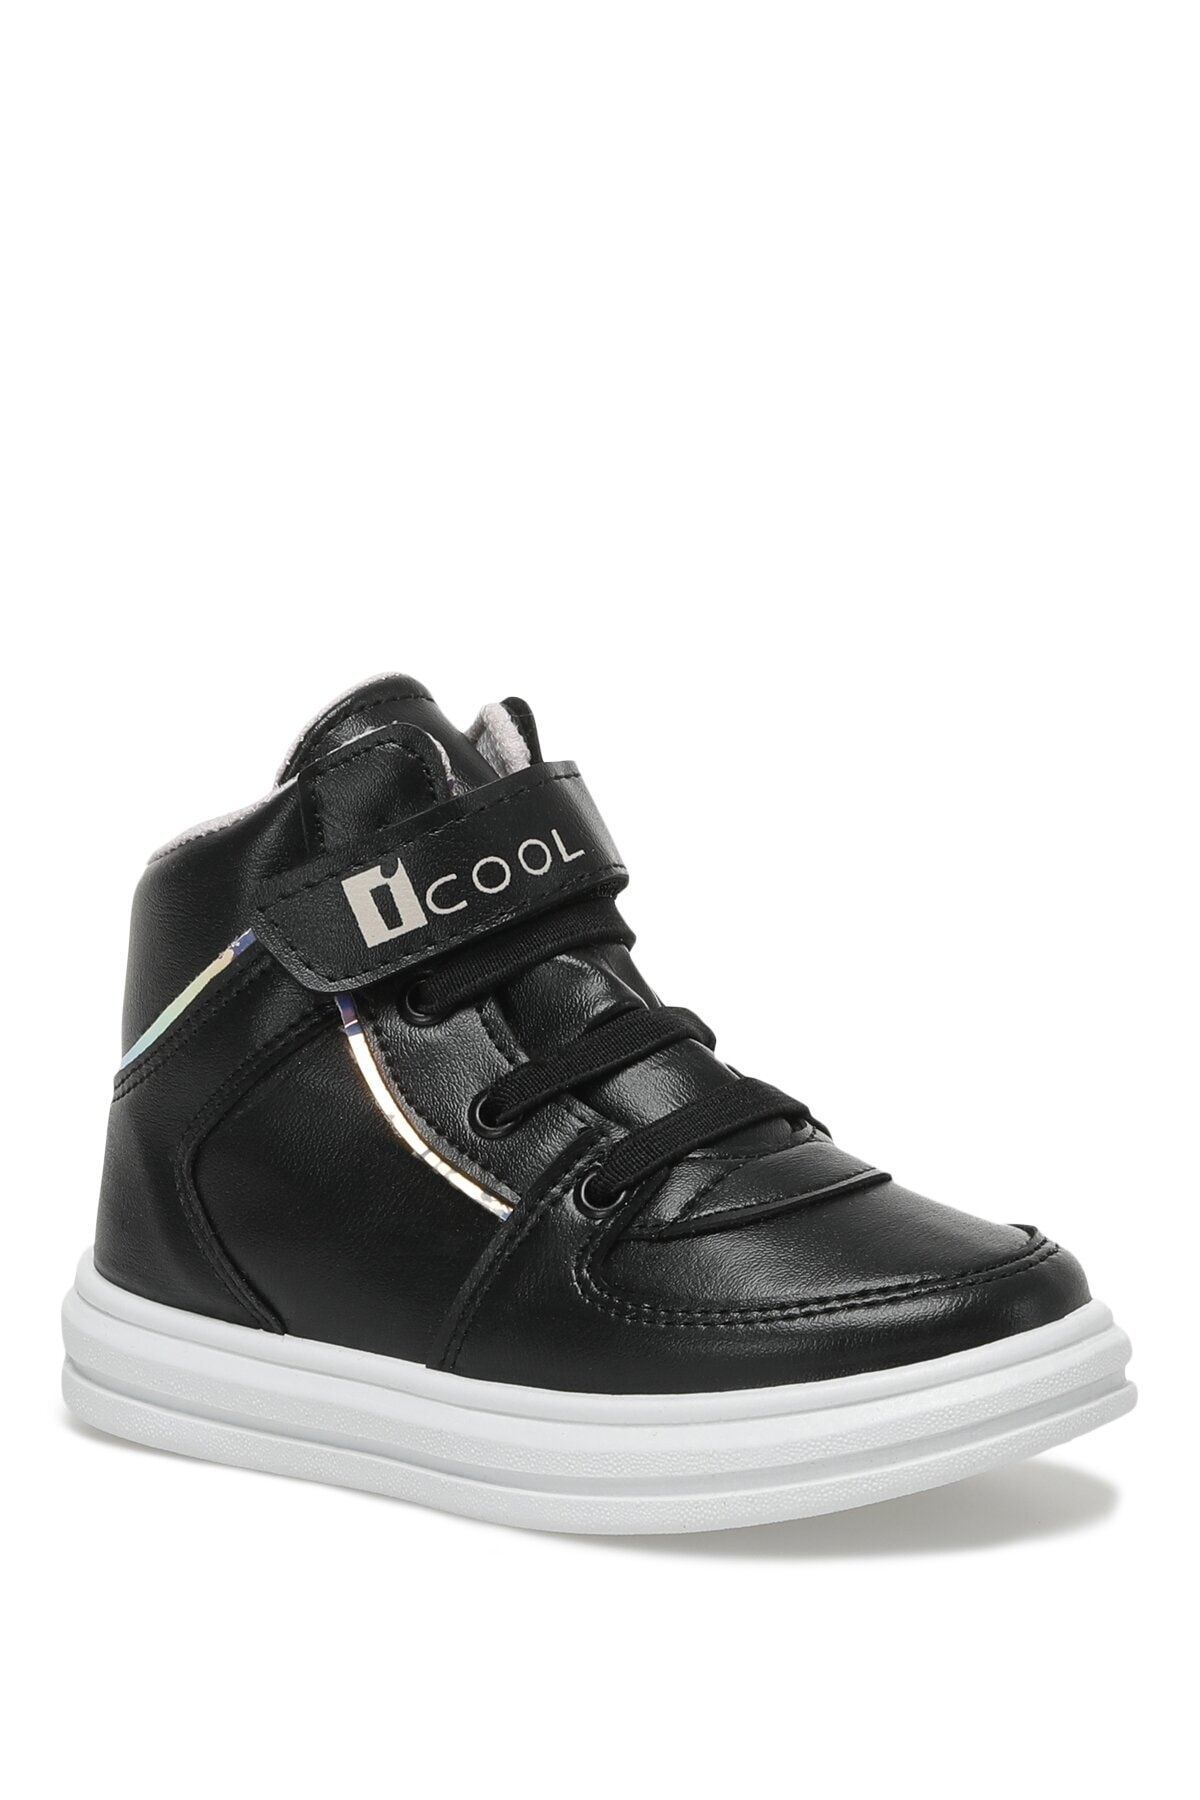 Icool Molına 2pr Siyah Kız Çocuk High Sneaker